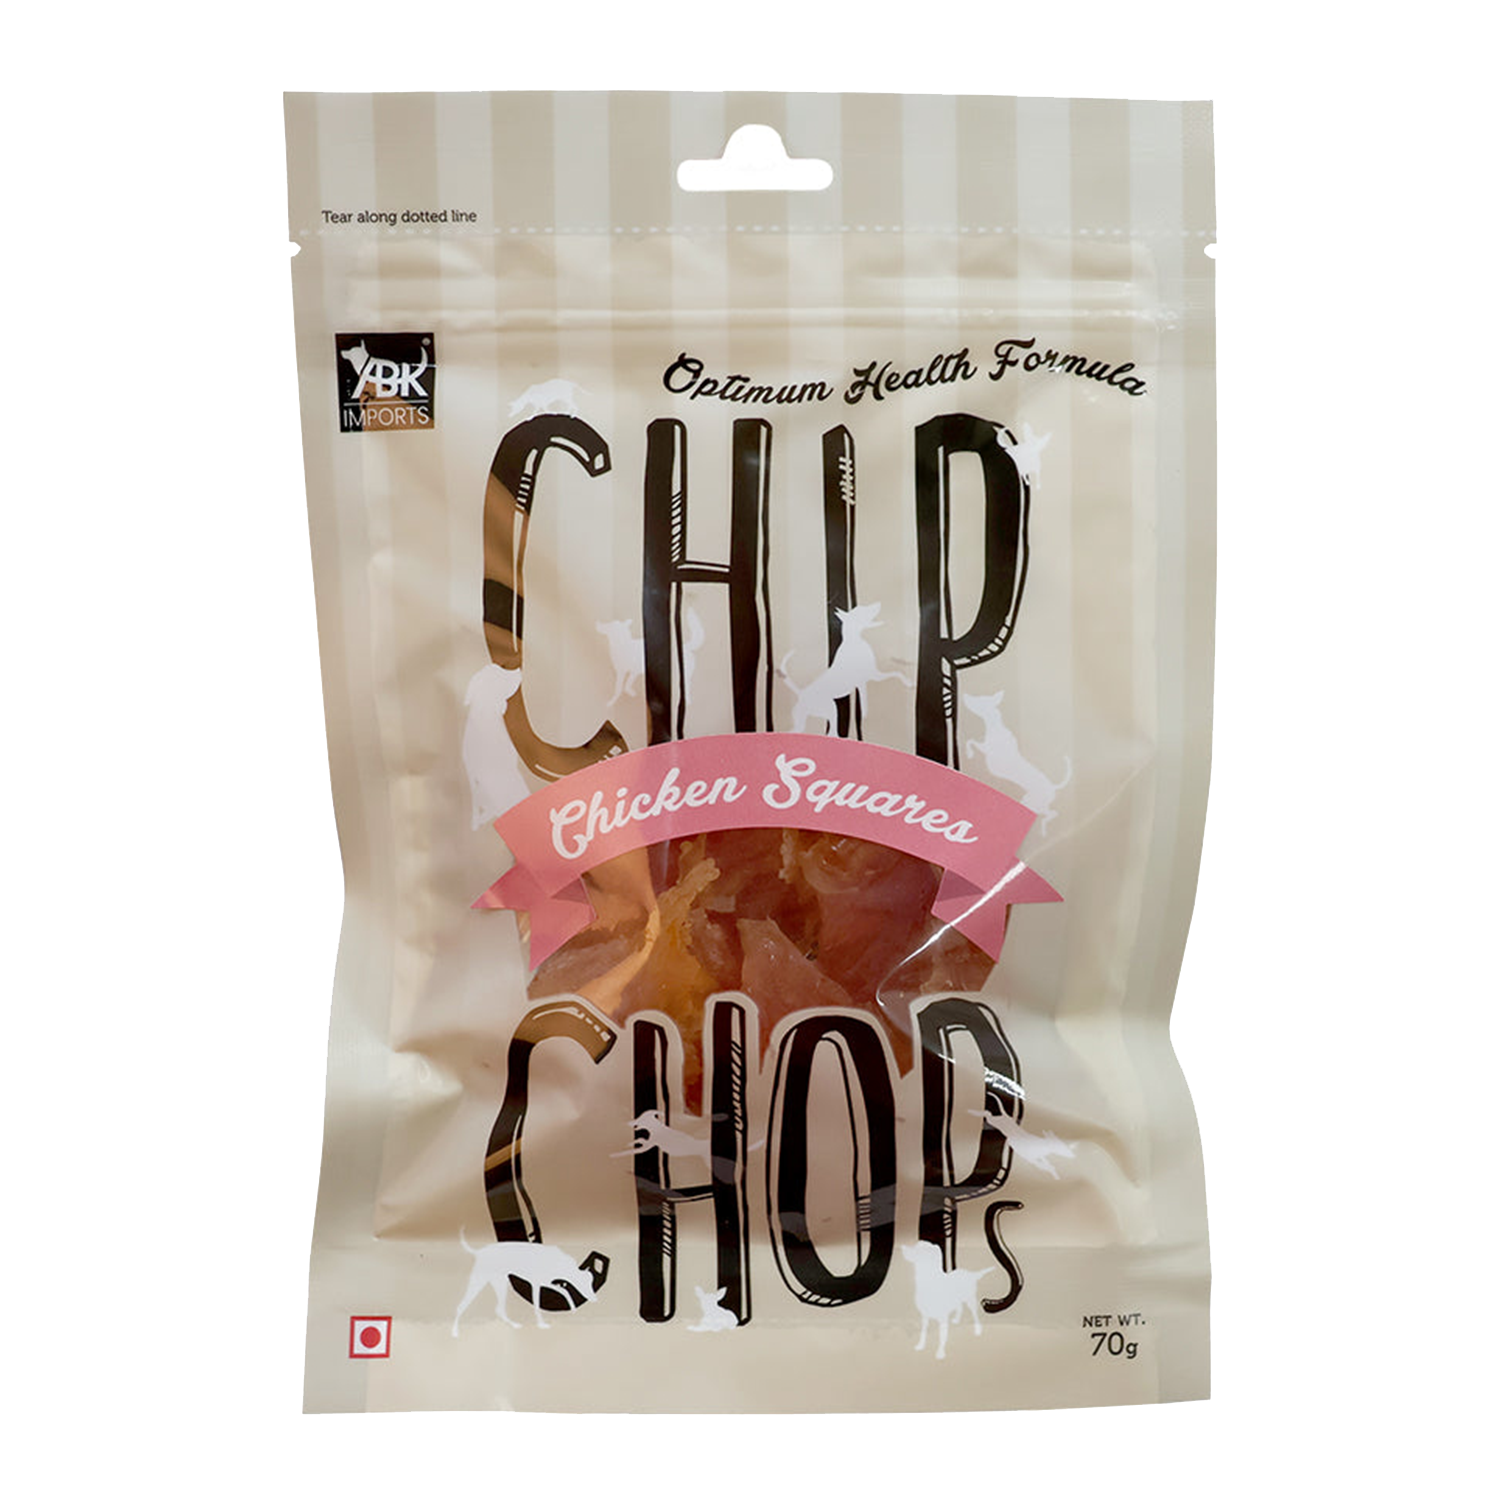 Chip Chops Chicken Squares F | dog food | petzsetgo